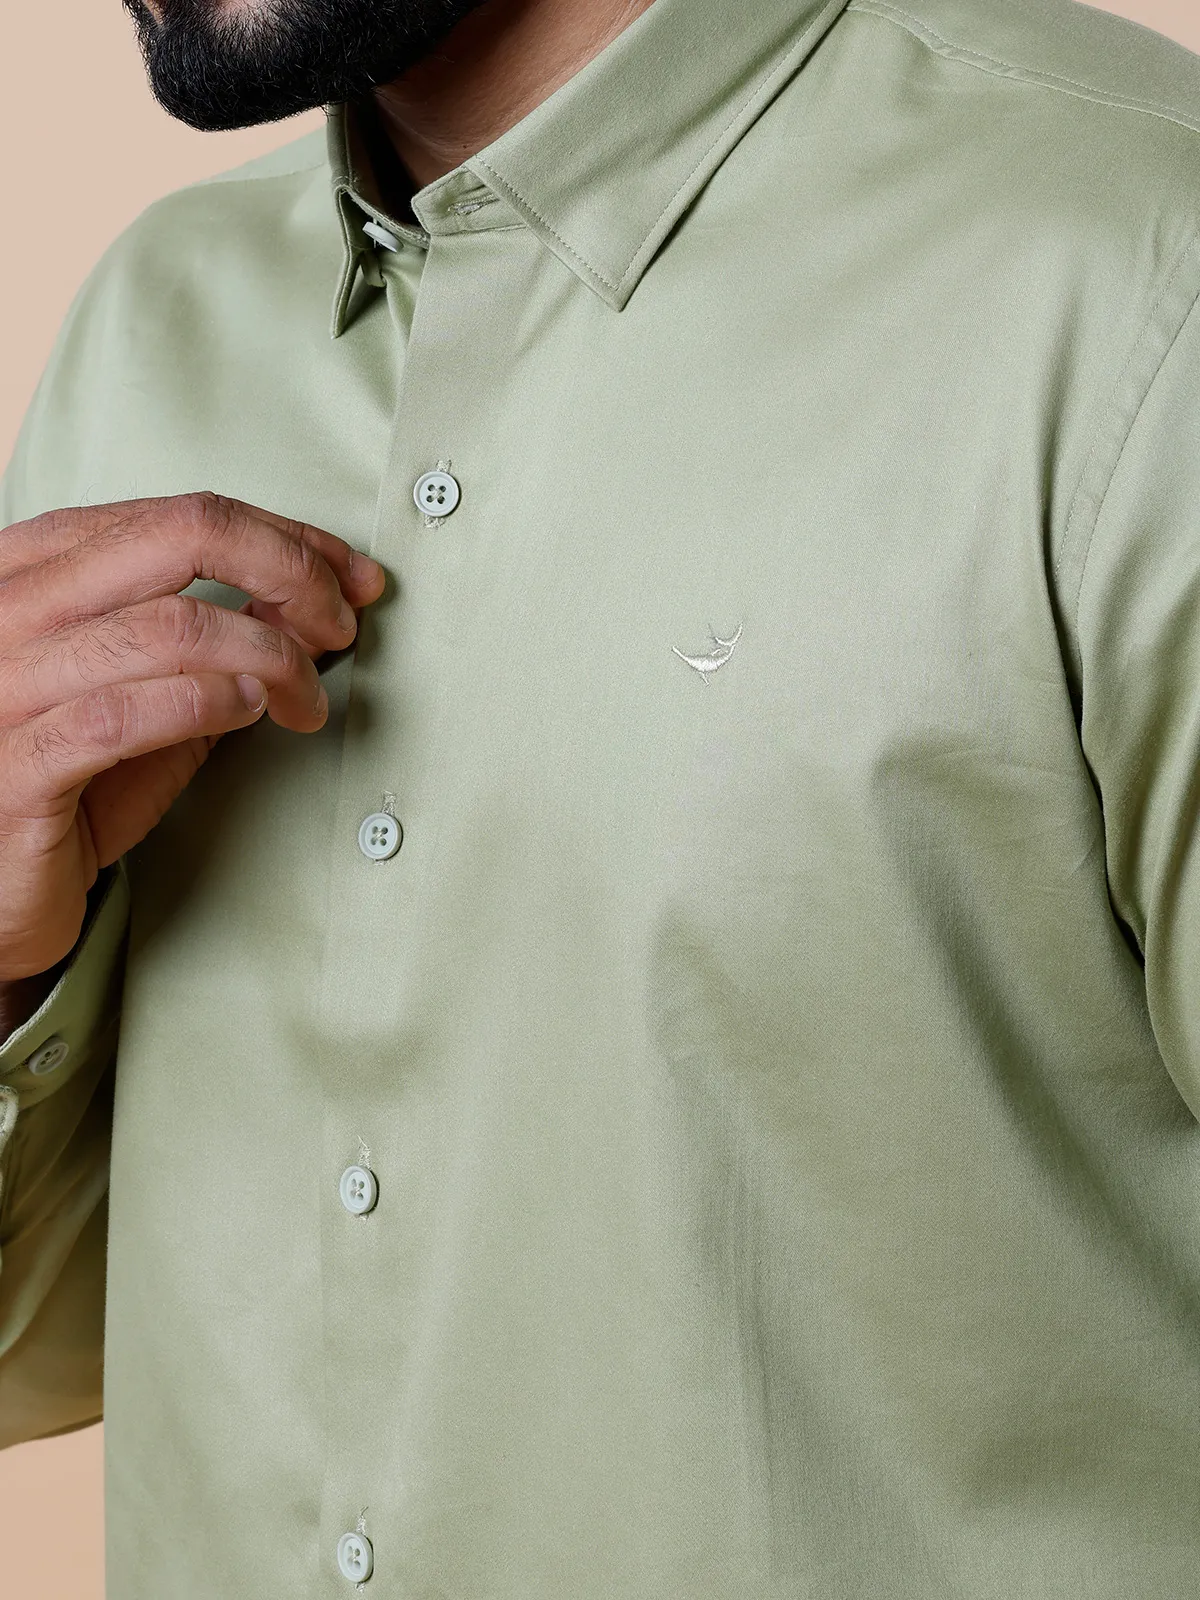 Frio pista green plain cotton shirt